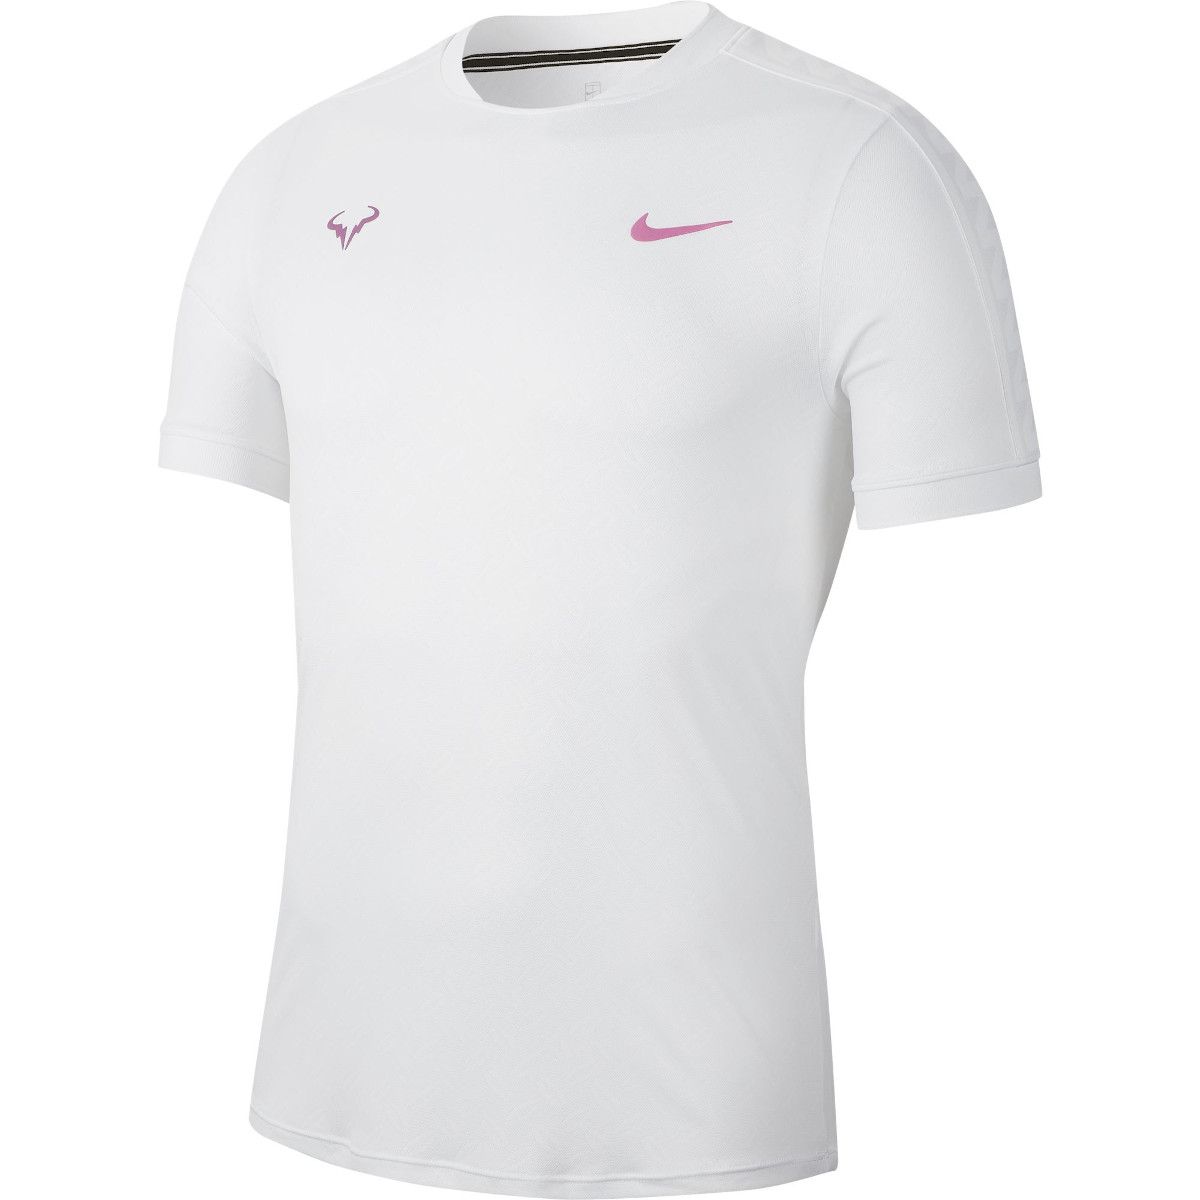 NikeCourt AeroReact Rafa Men's Short-Sleeve Tennis Top AT418